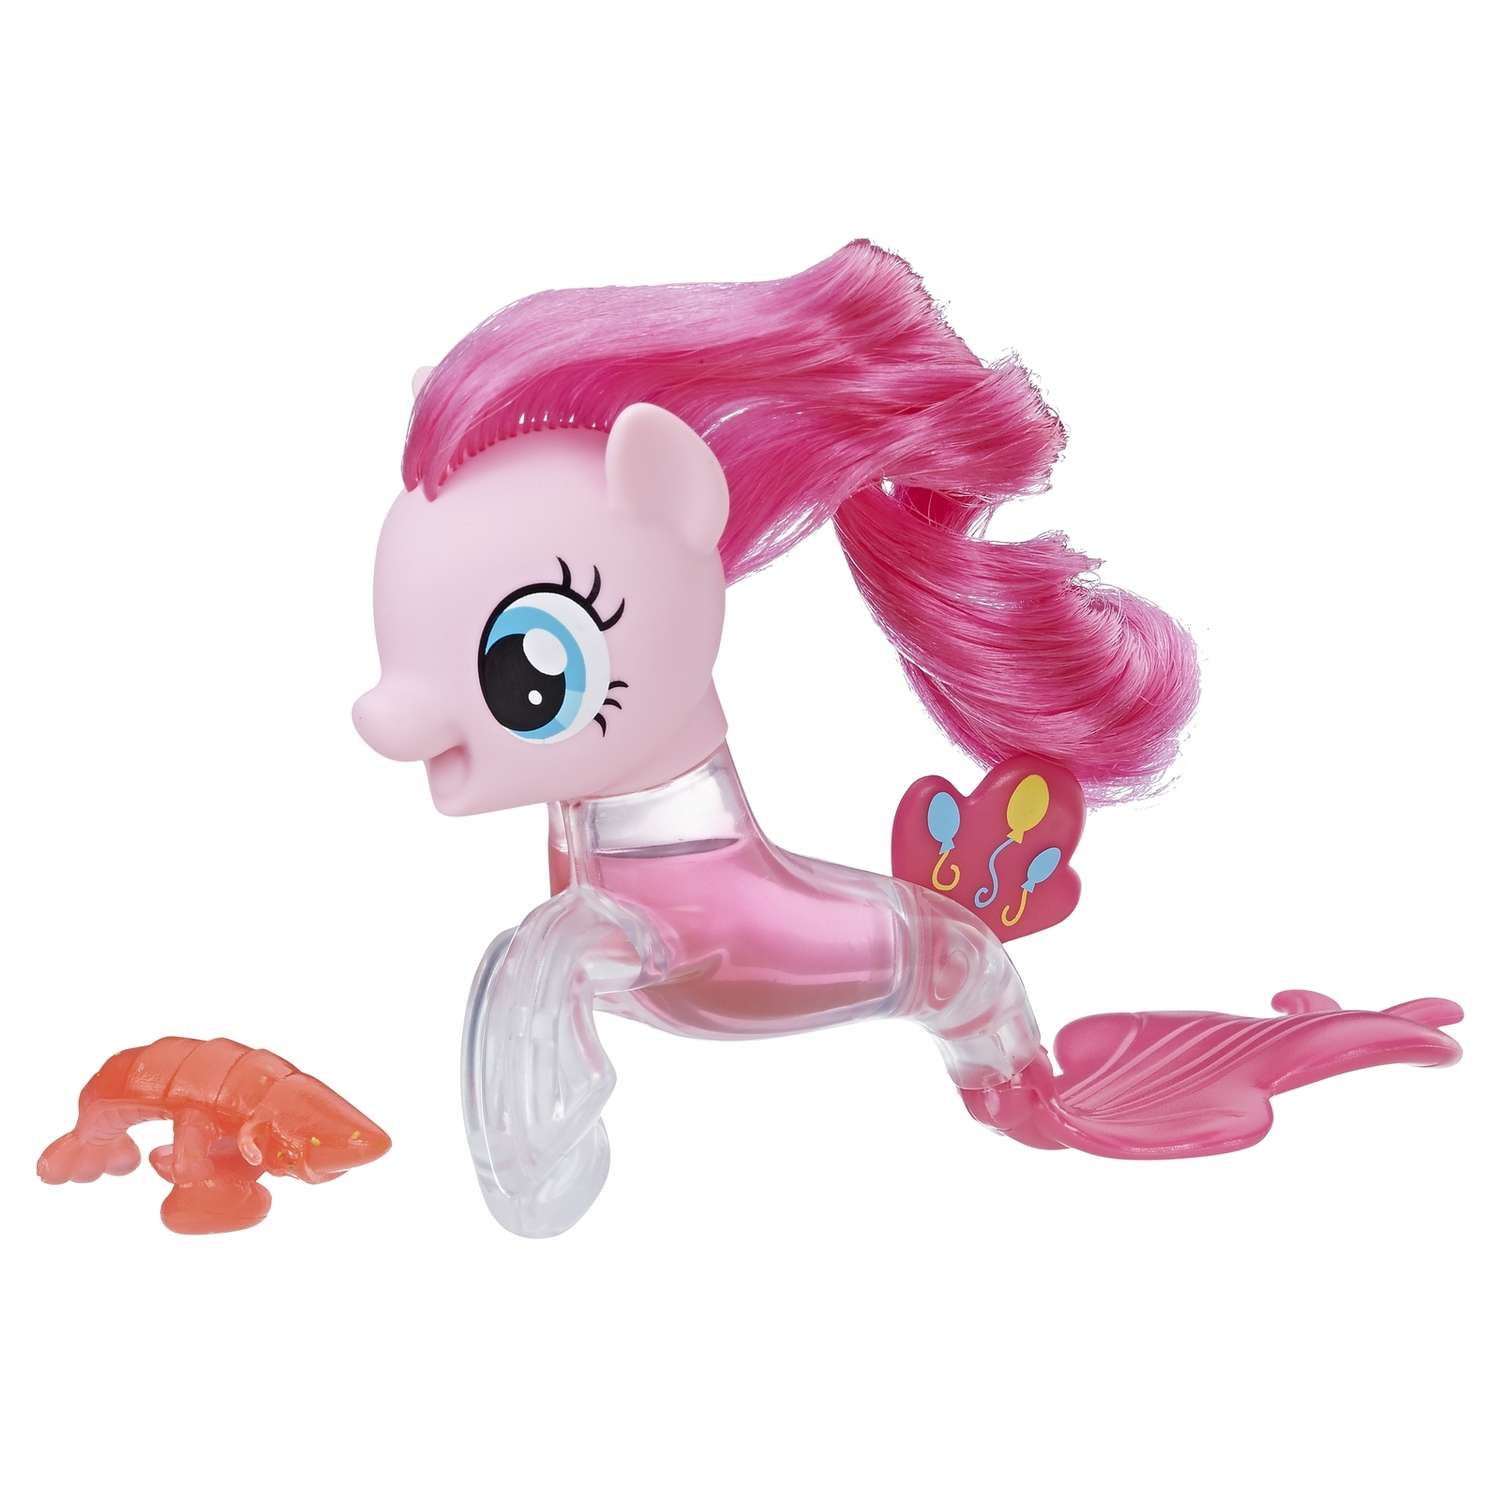 Игрушка My Little Pony Пони подружки в ассортименте E0188EU4 - фото 3